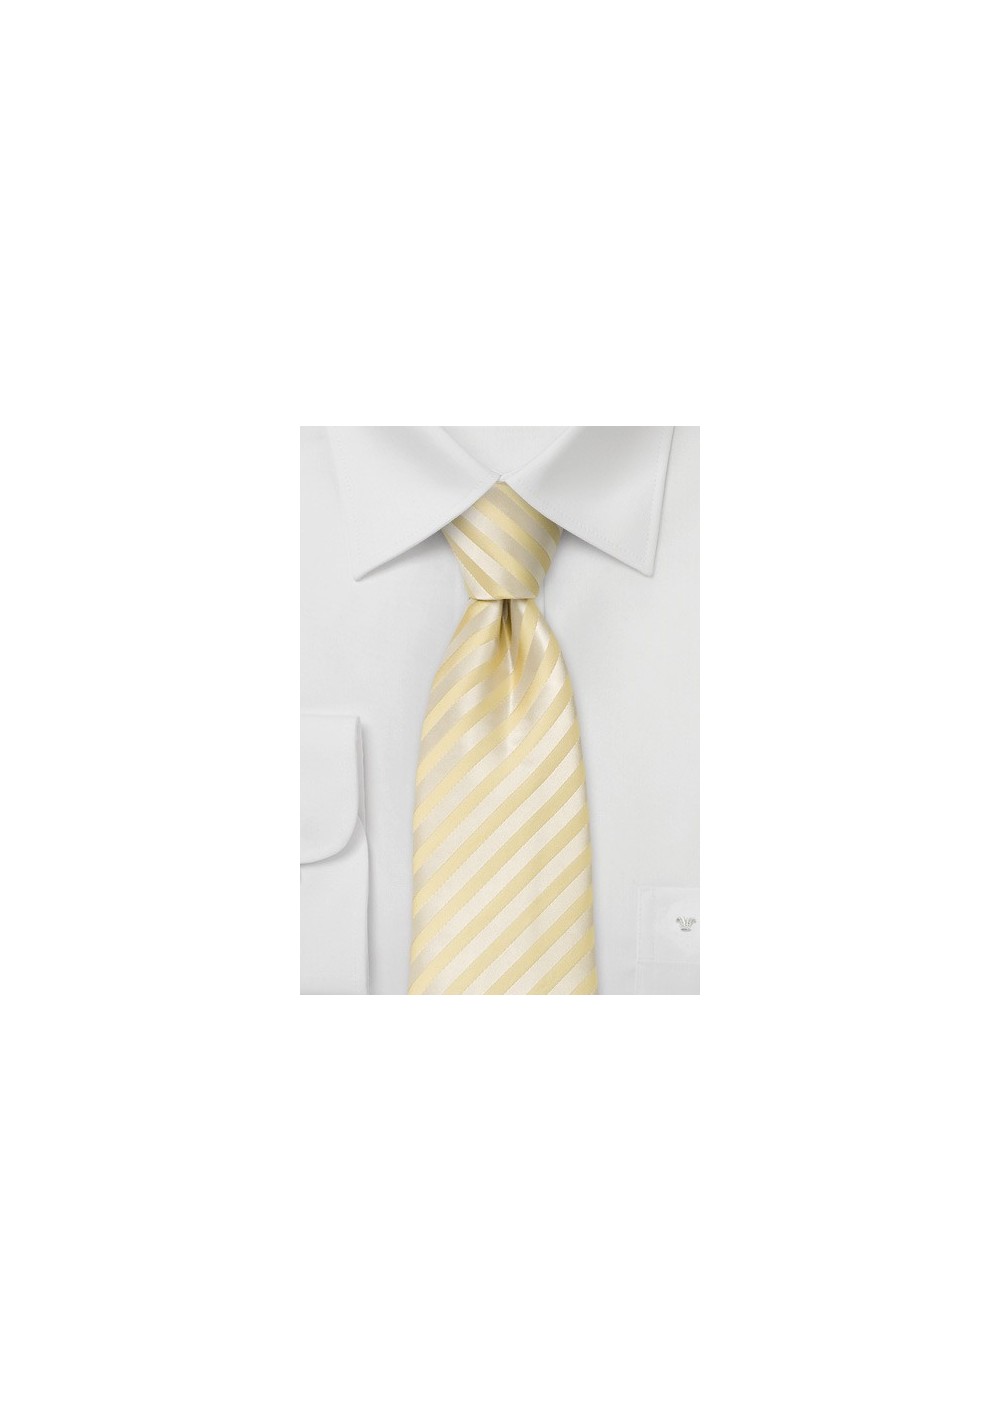 Light Yellow Silk Tie